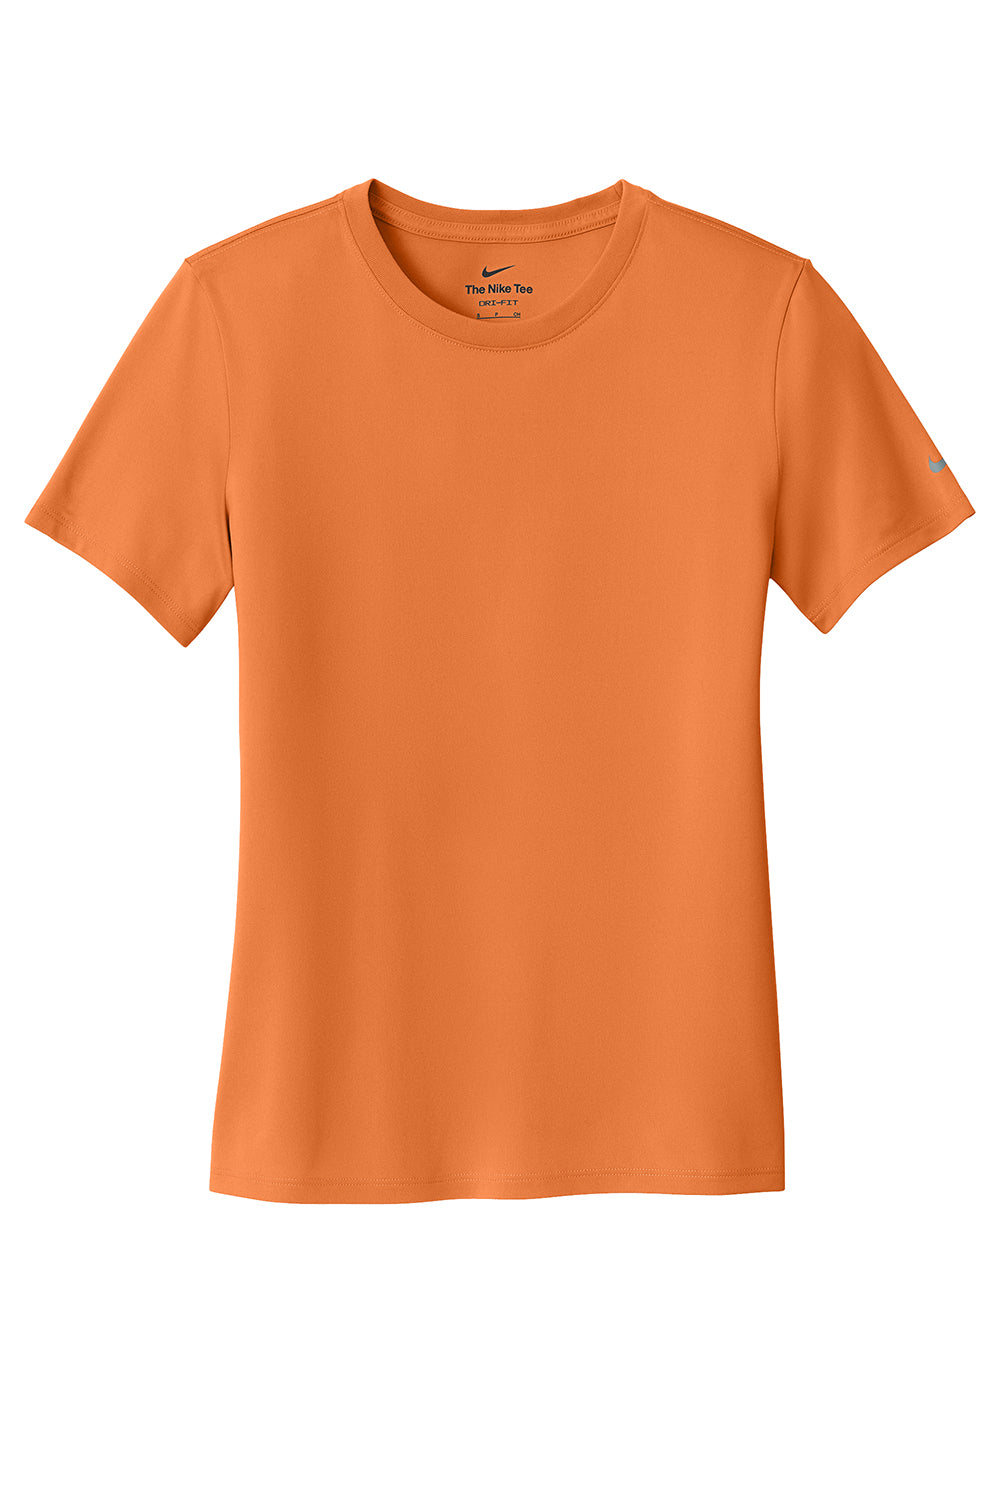 Nike NKDX8734 Womens rLegend Dri-Fit Moisture Wicking Short Sleeve Crewneck T-Shirt Desert Orange Flat Front